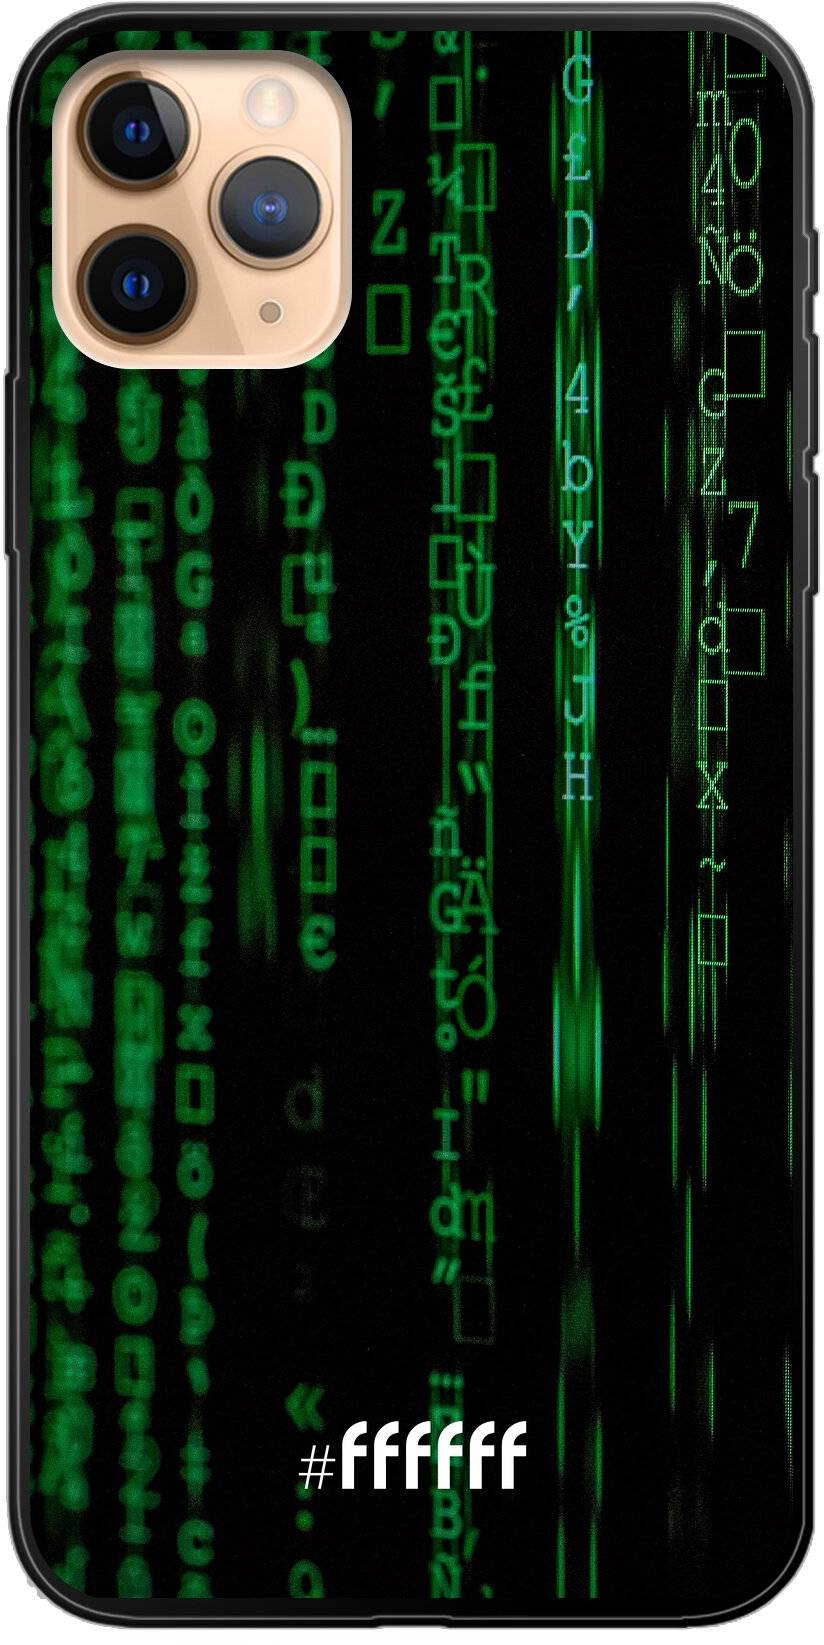 Hacking The Matrix iPhone 11 Pro Max